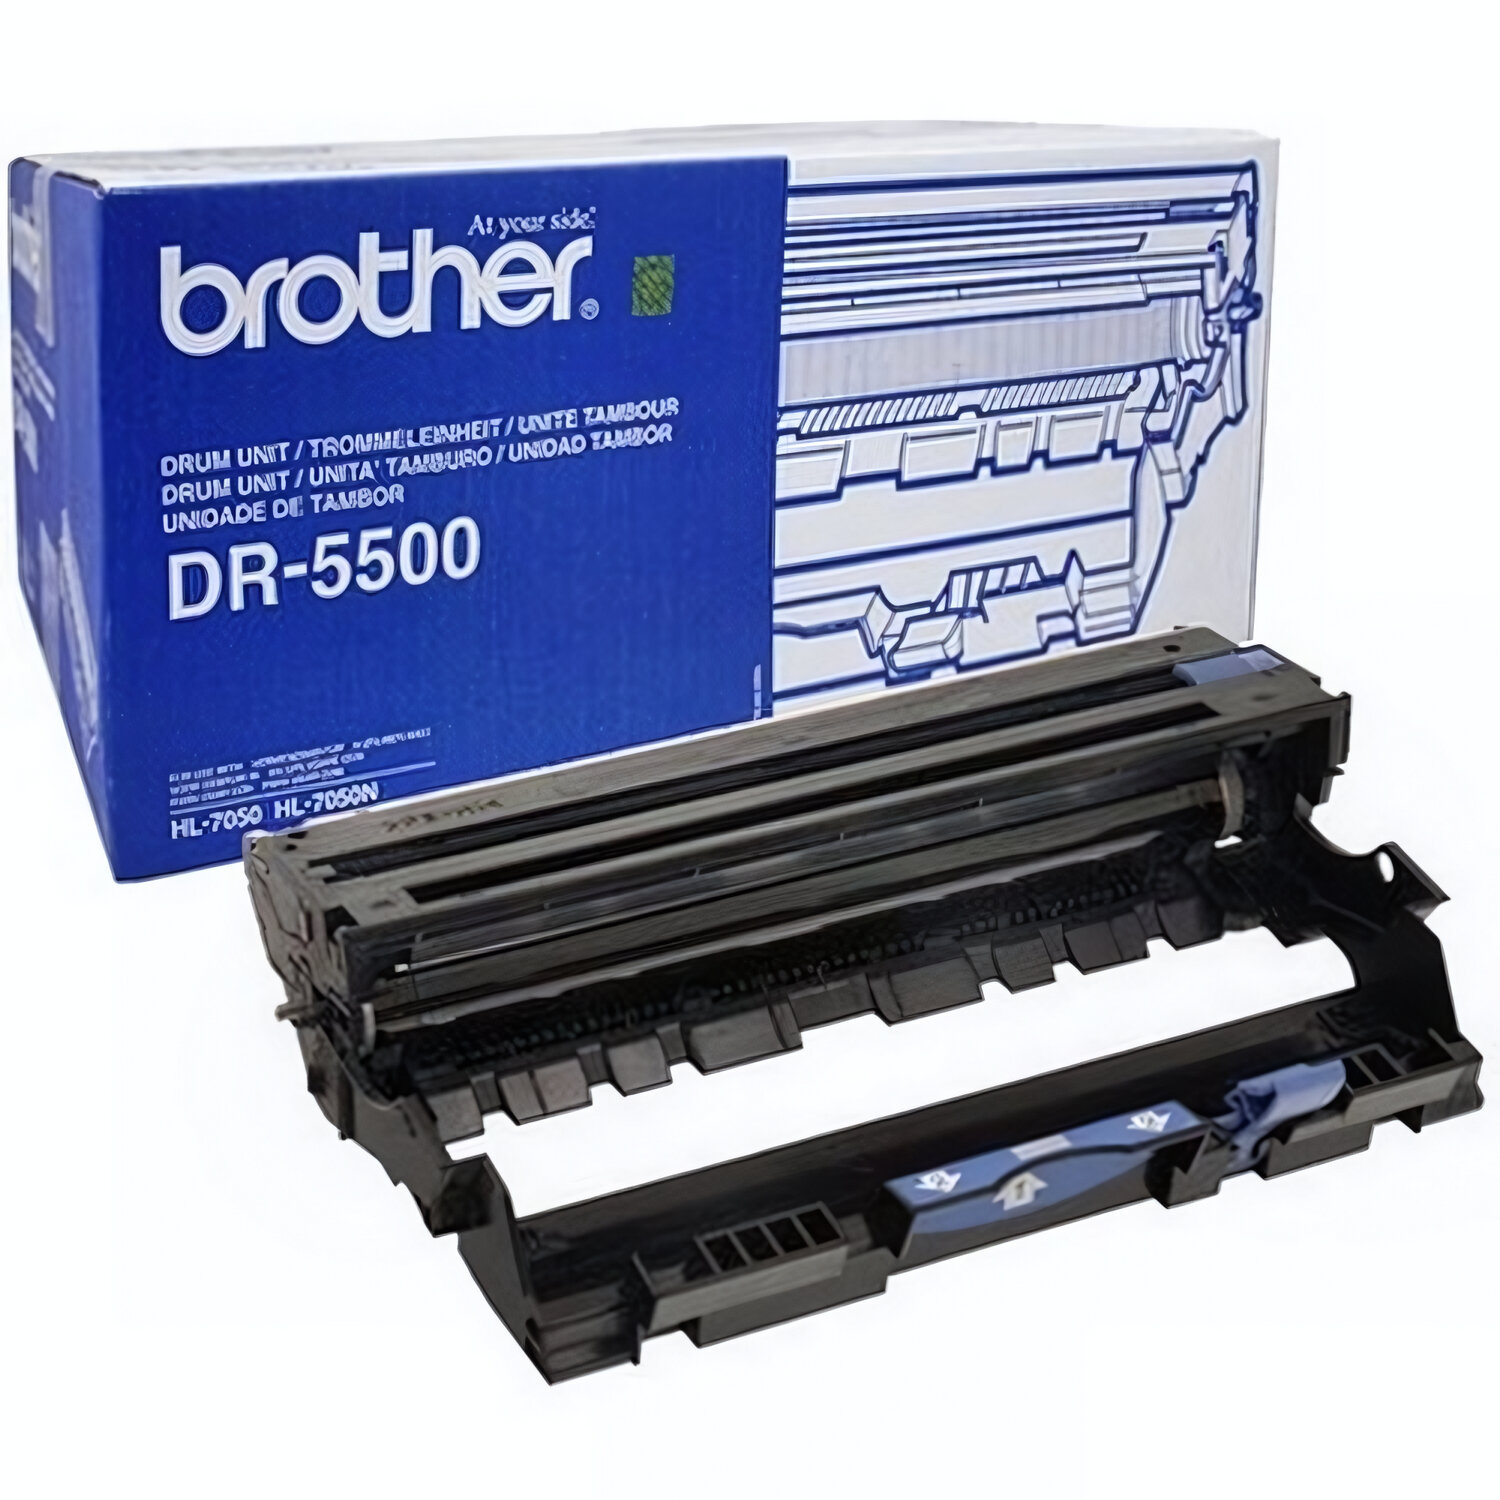 DR5500 Фотобарабан Brother для HL-7050/7050n + ресурс 40 000 страниц